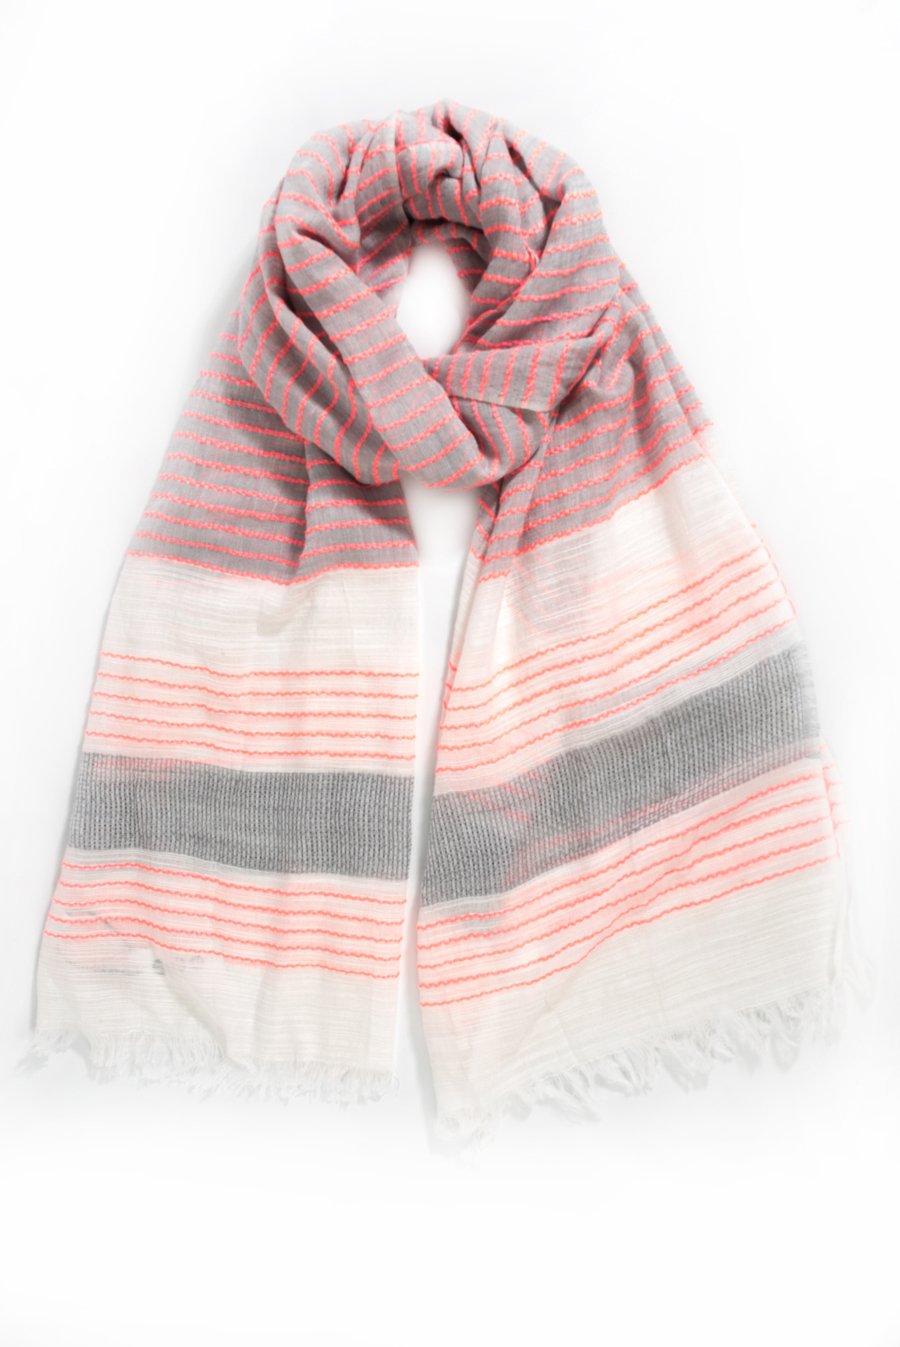 White & Grey Neon striped scarf